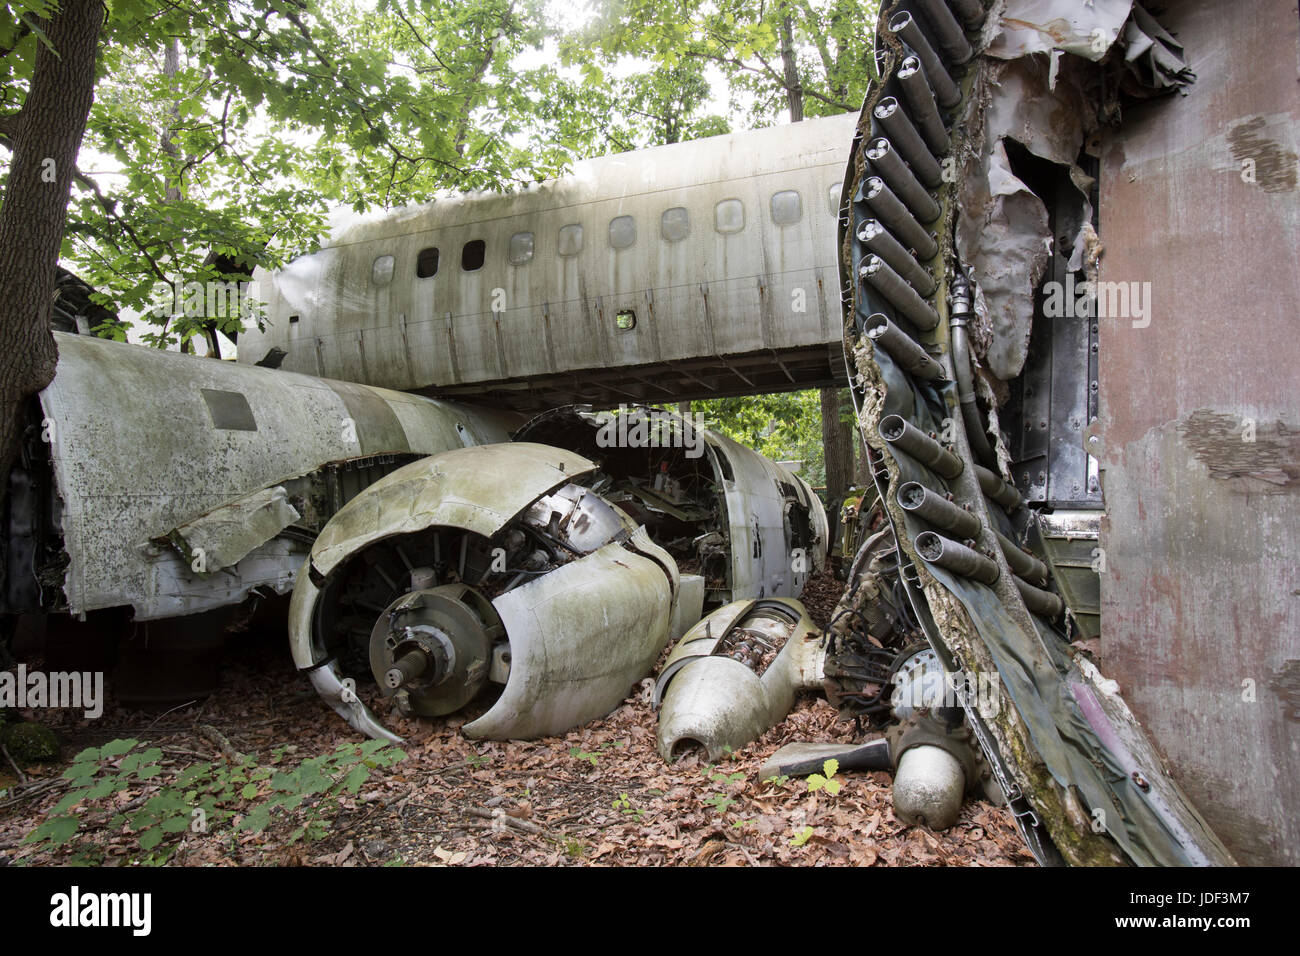 Wreckage of crashed plane in wooded junkyard. Stock Photo